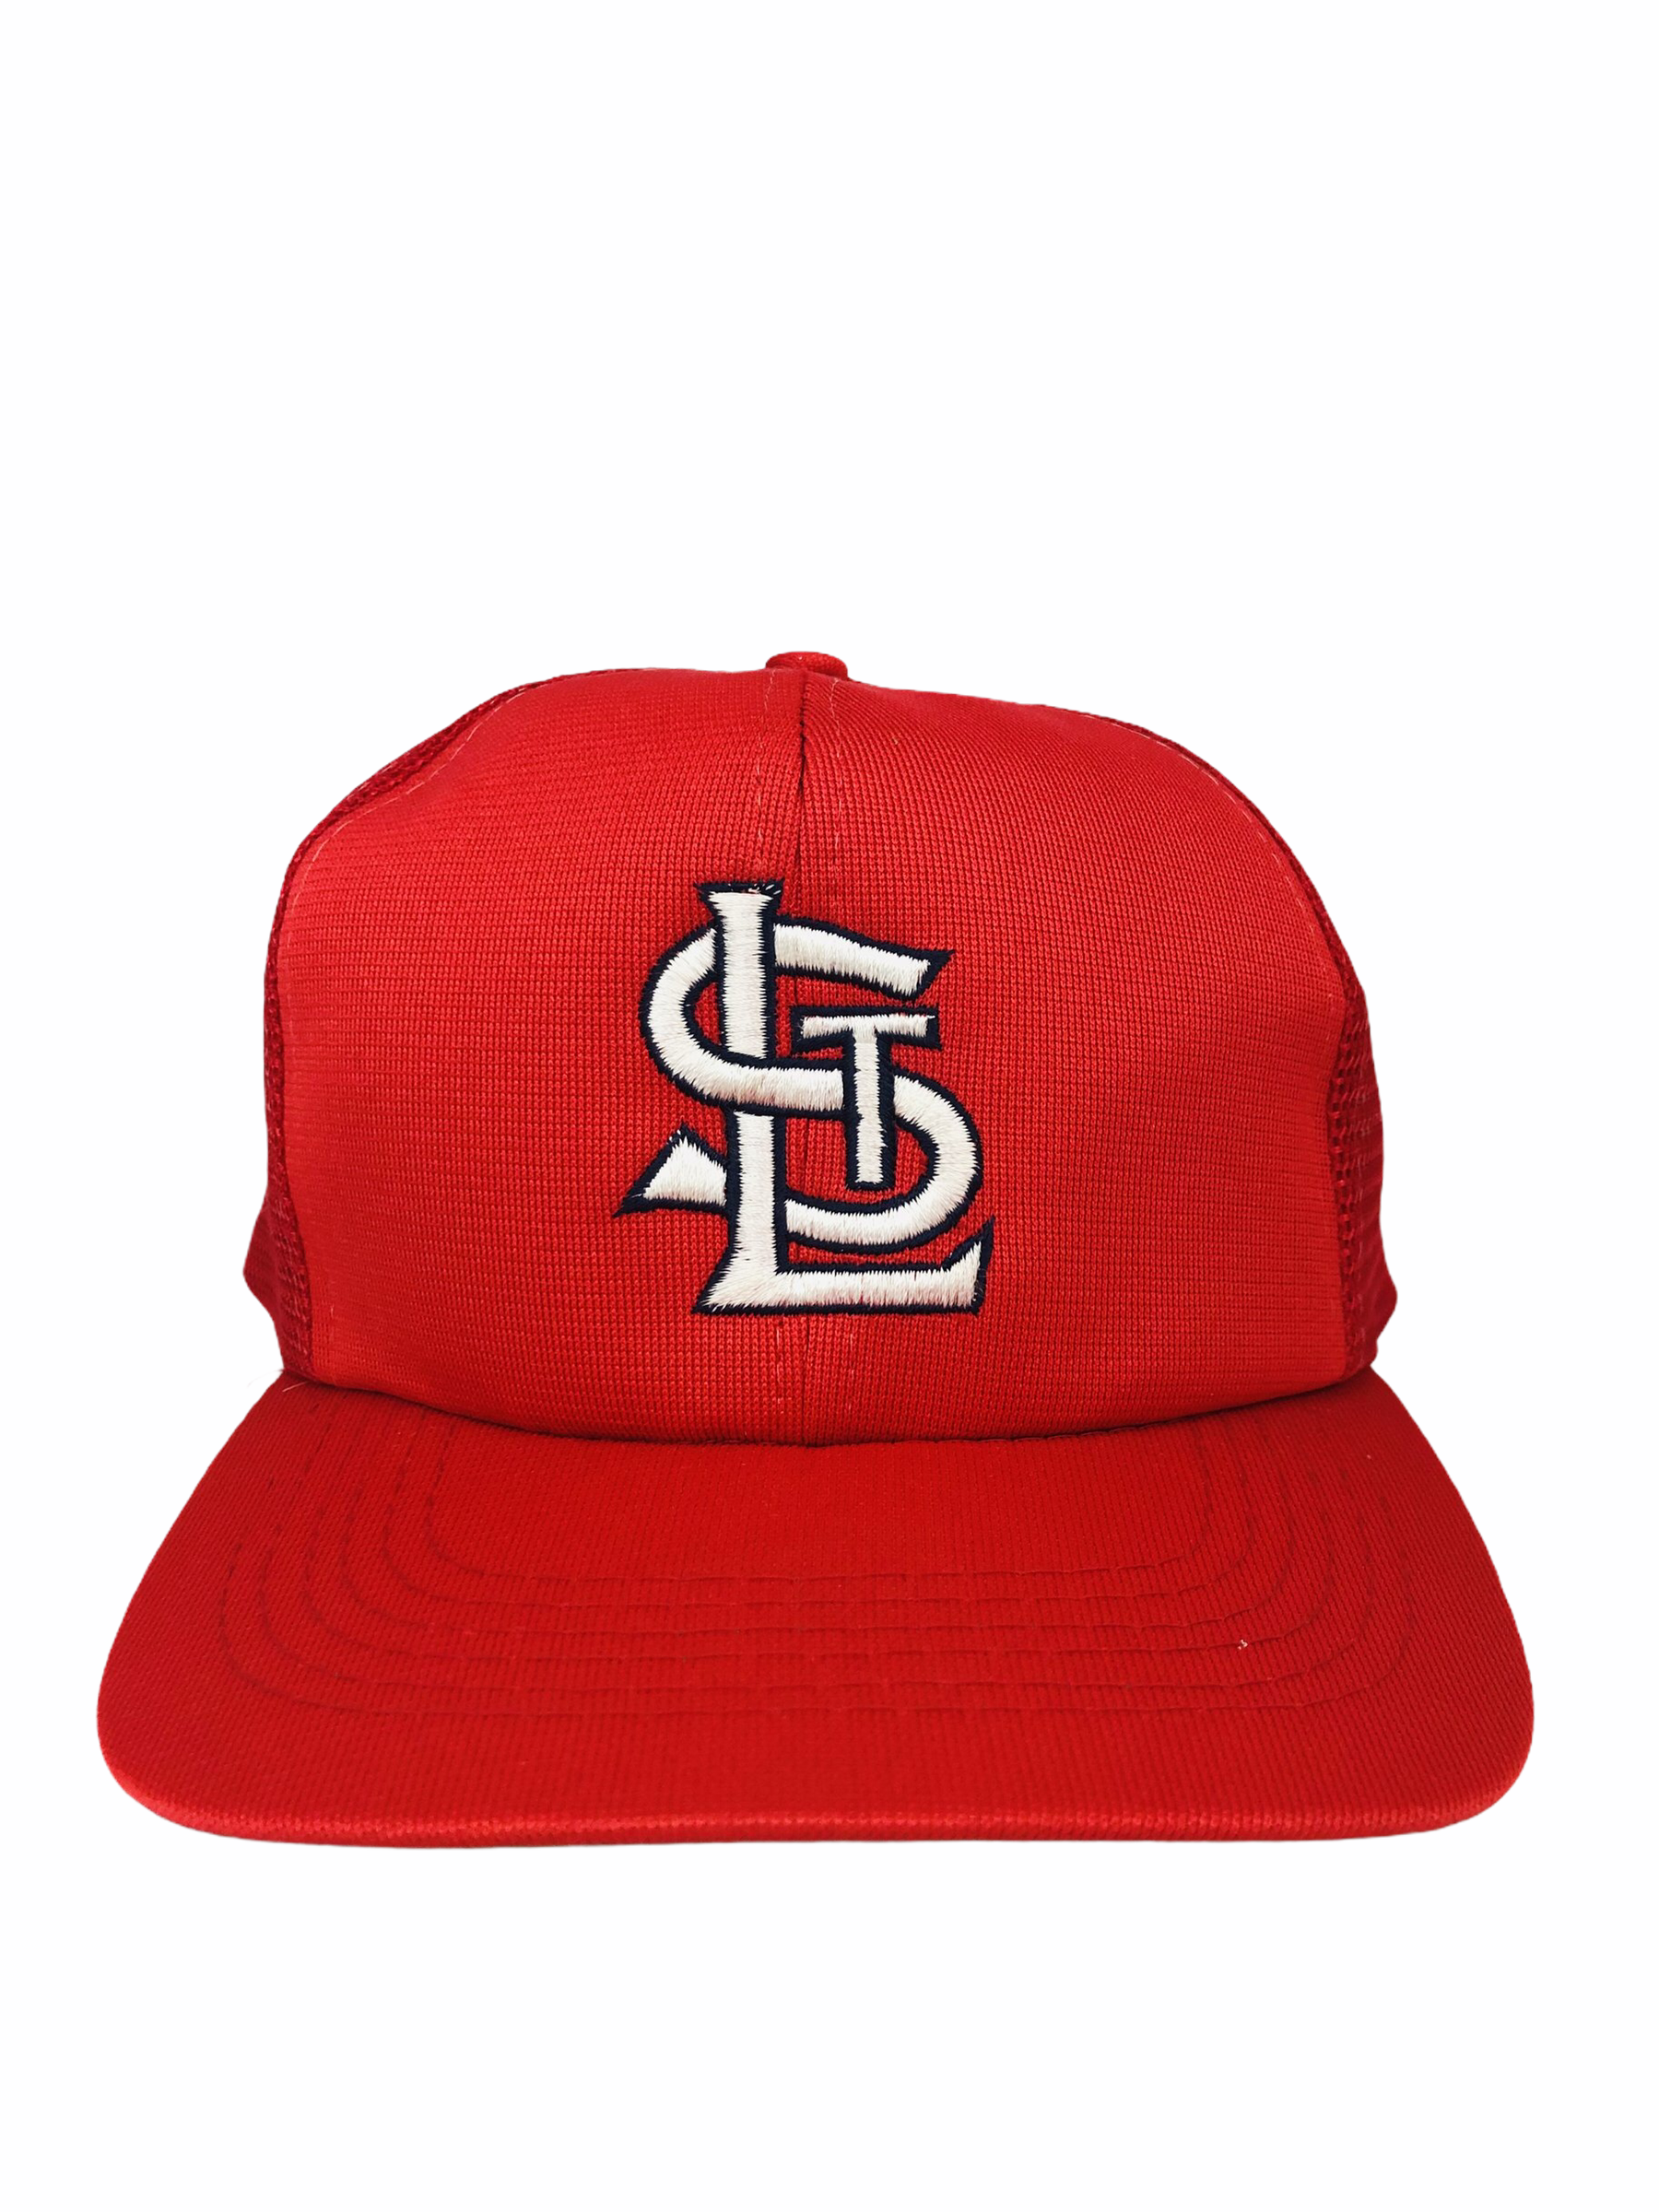 St. Louis Cardinals Hat, Cardinals Baseball Hats, Baseball Cap